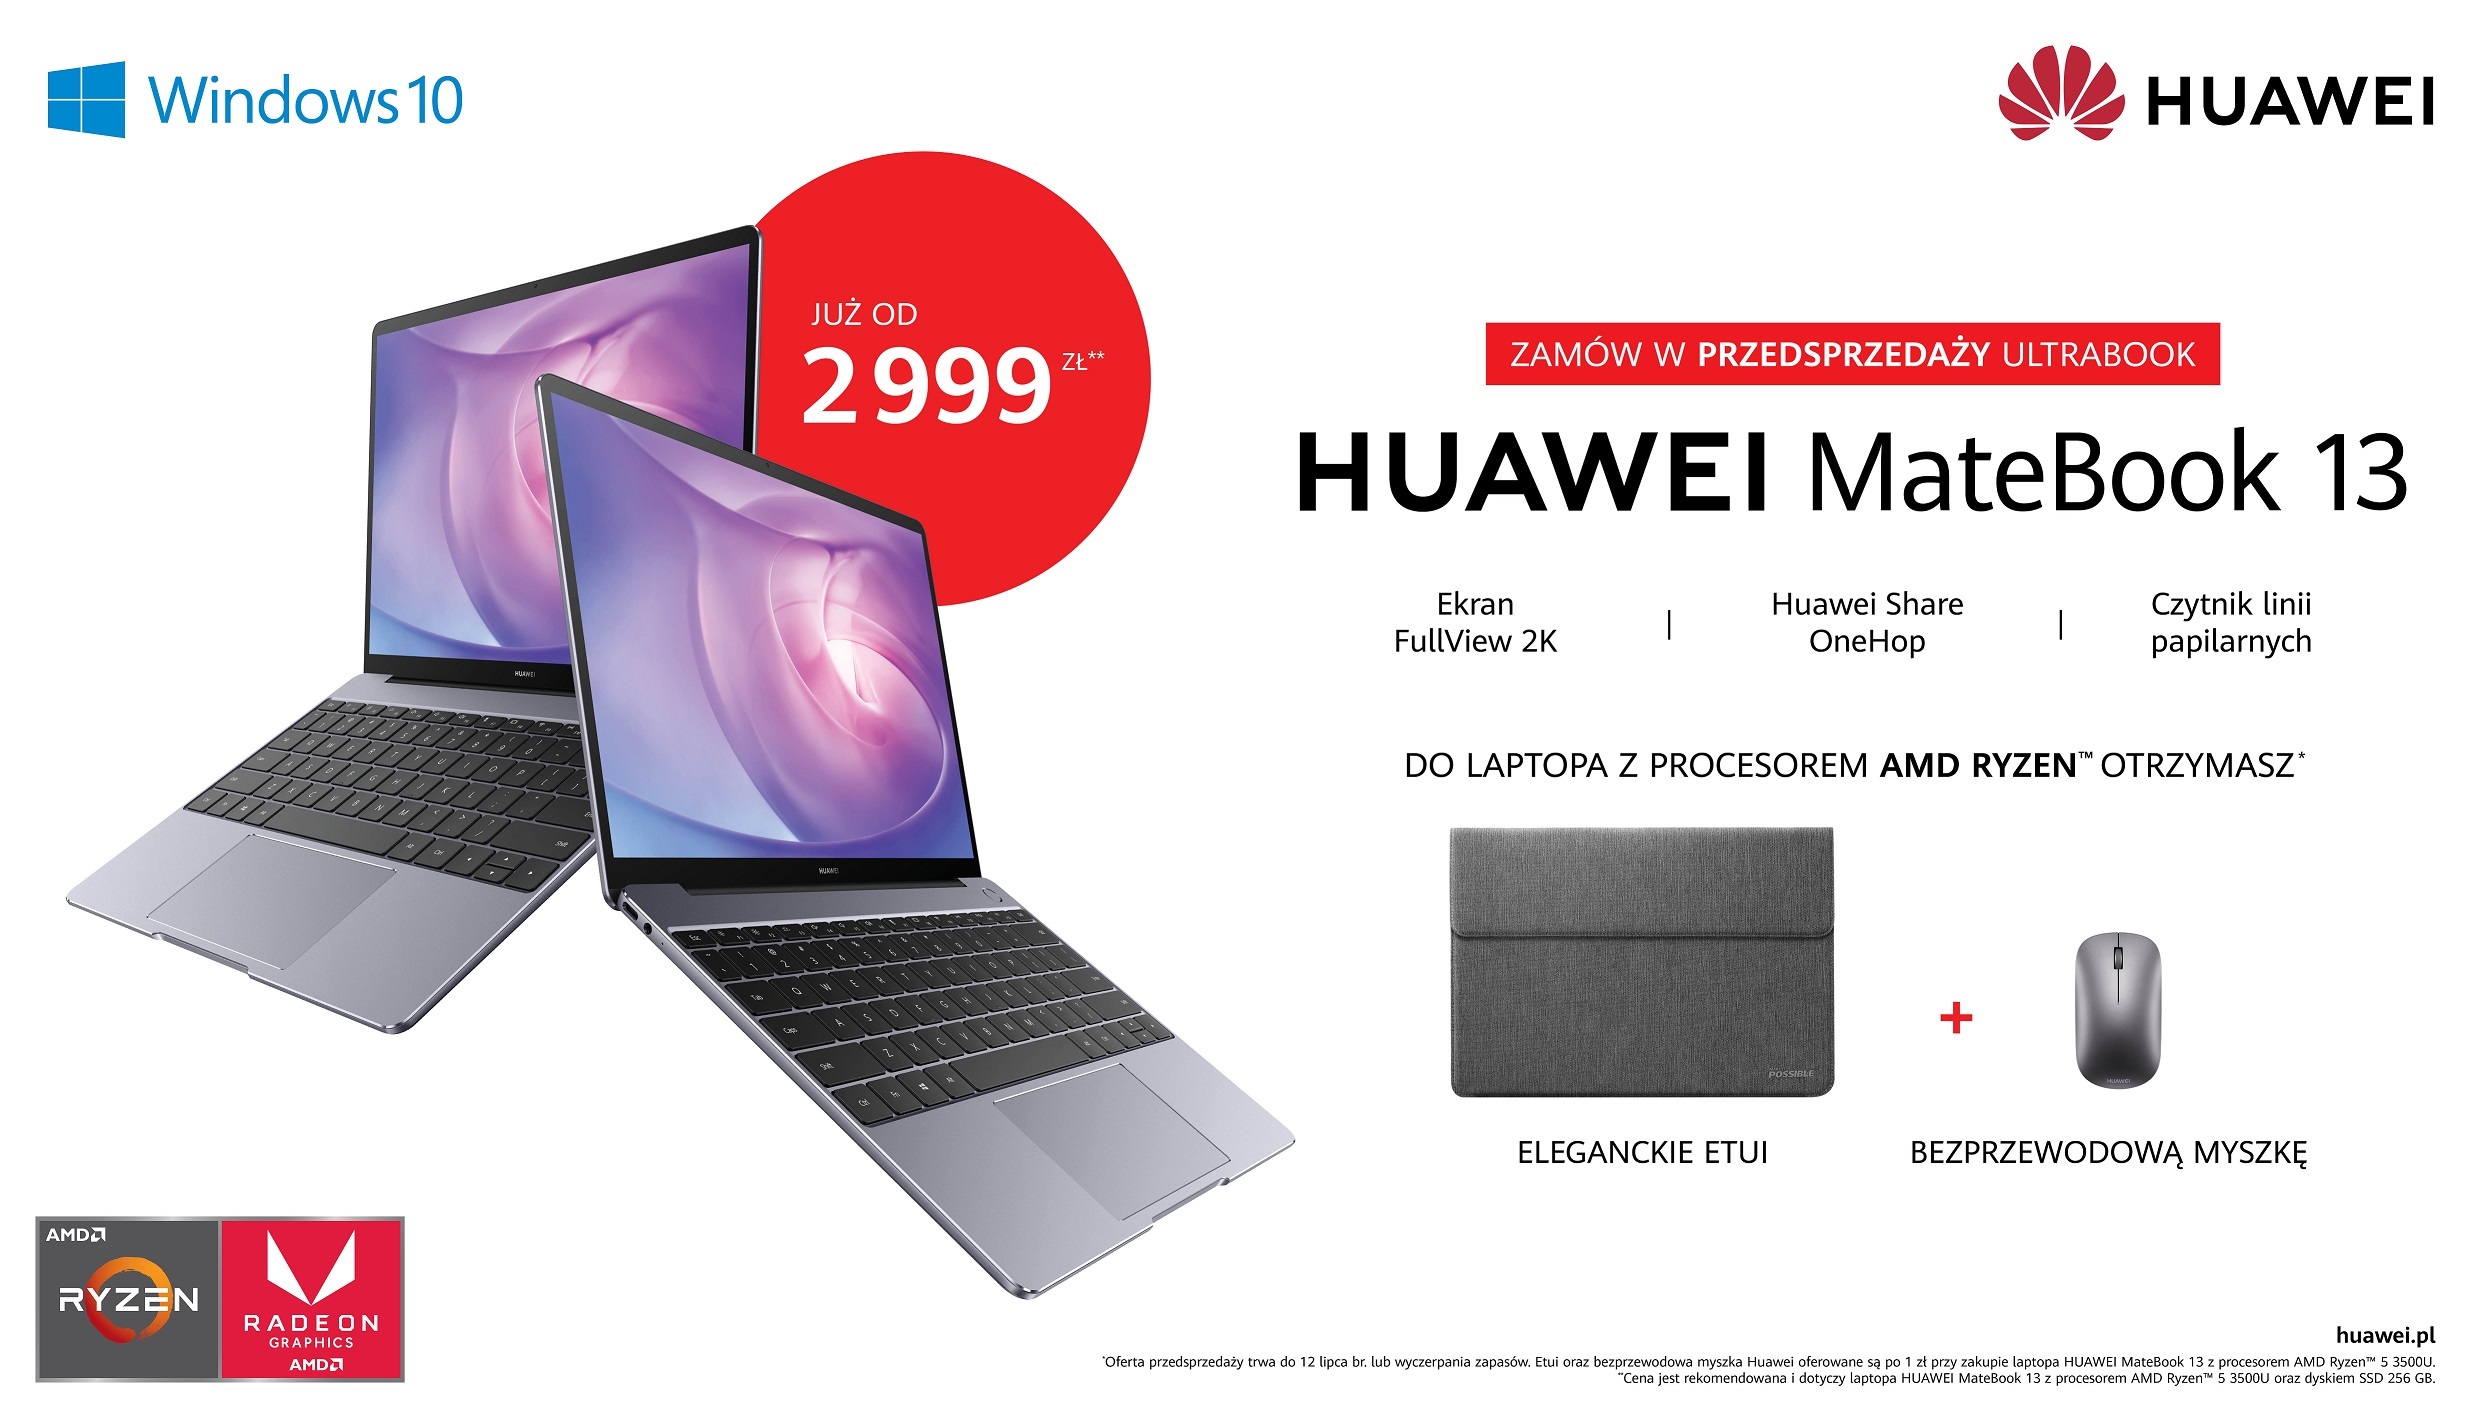 Huawei MateBook 13 AMD Ryzen 5 3500U laptop